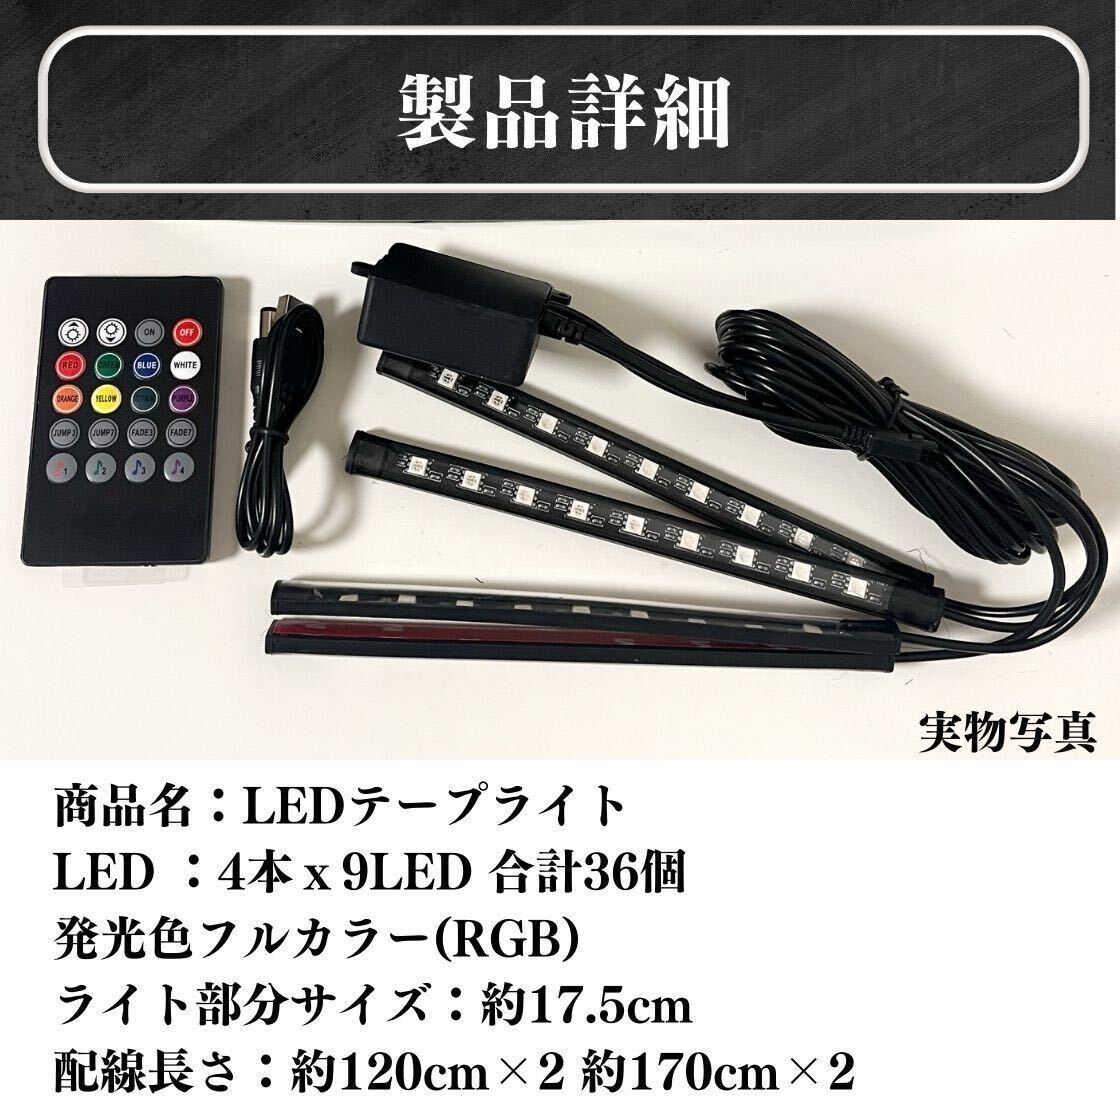 LED テープライト USB 車内 装飾 照明 車内アクセサリー 間接照明 車 リモコン 防水 音楽 白 黄色 フットライト デスク インテリア シール